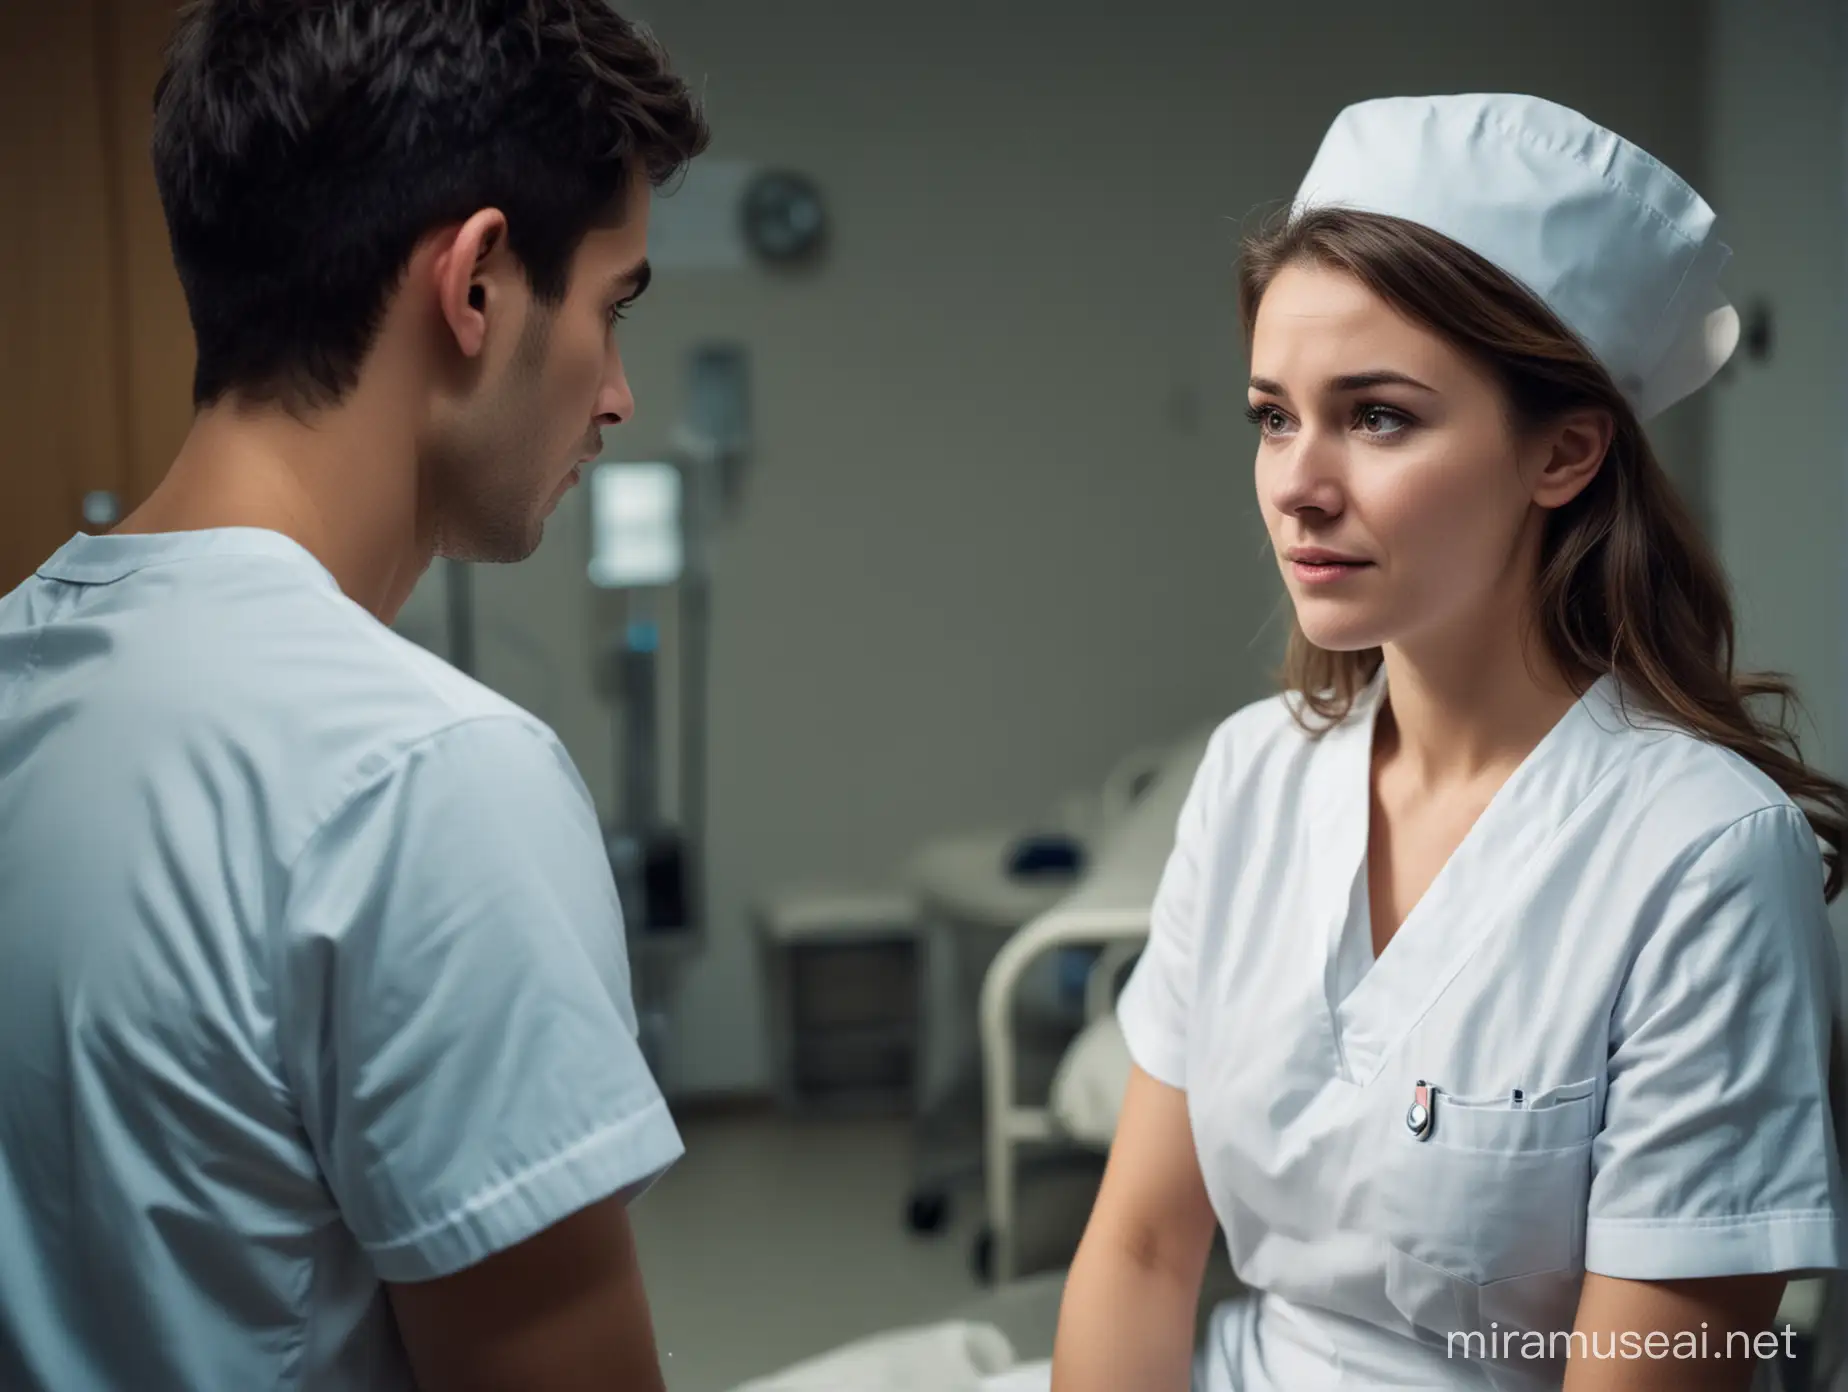 Nurse Duo in Moonlit Hospital Conversation